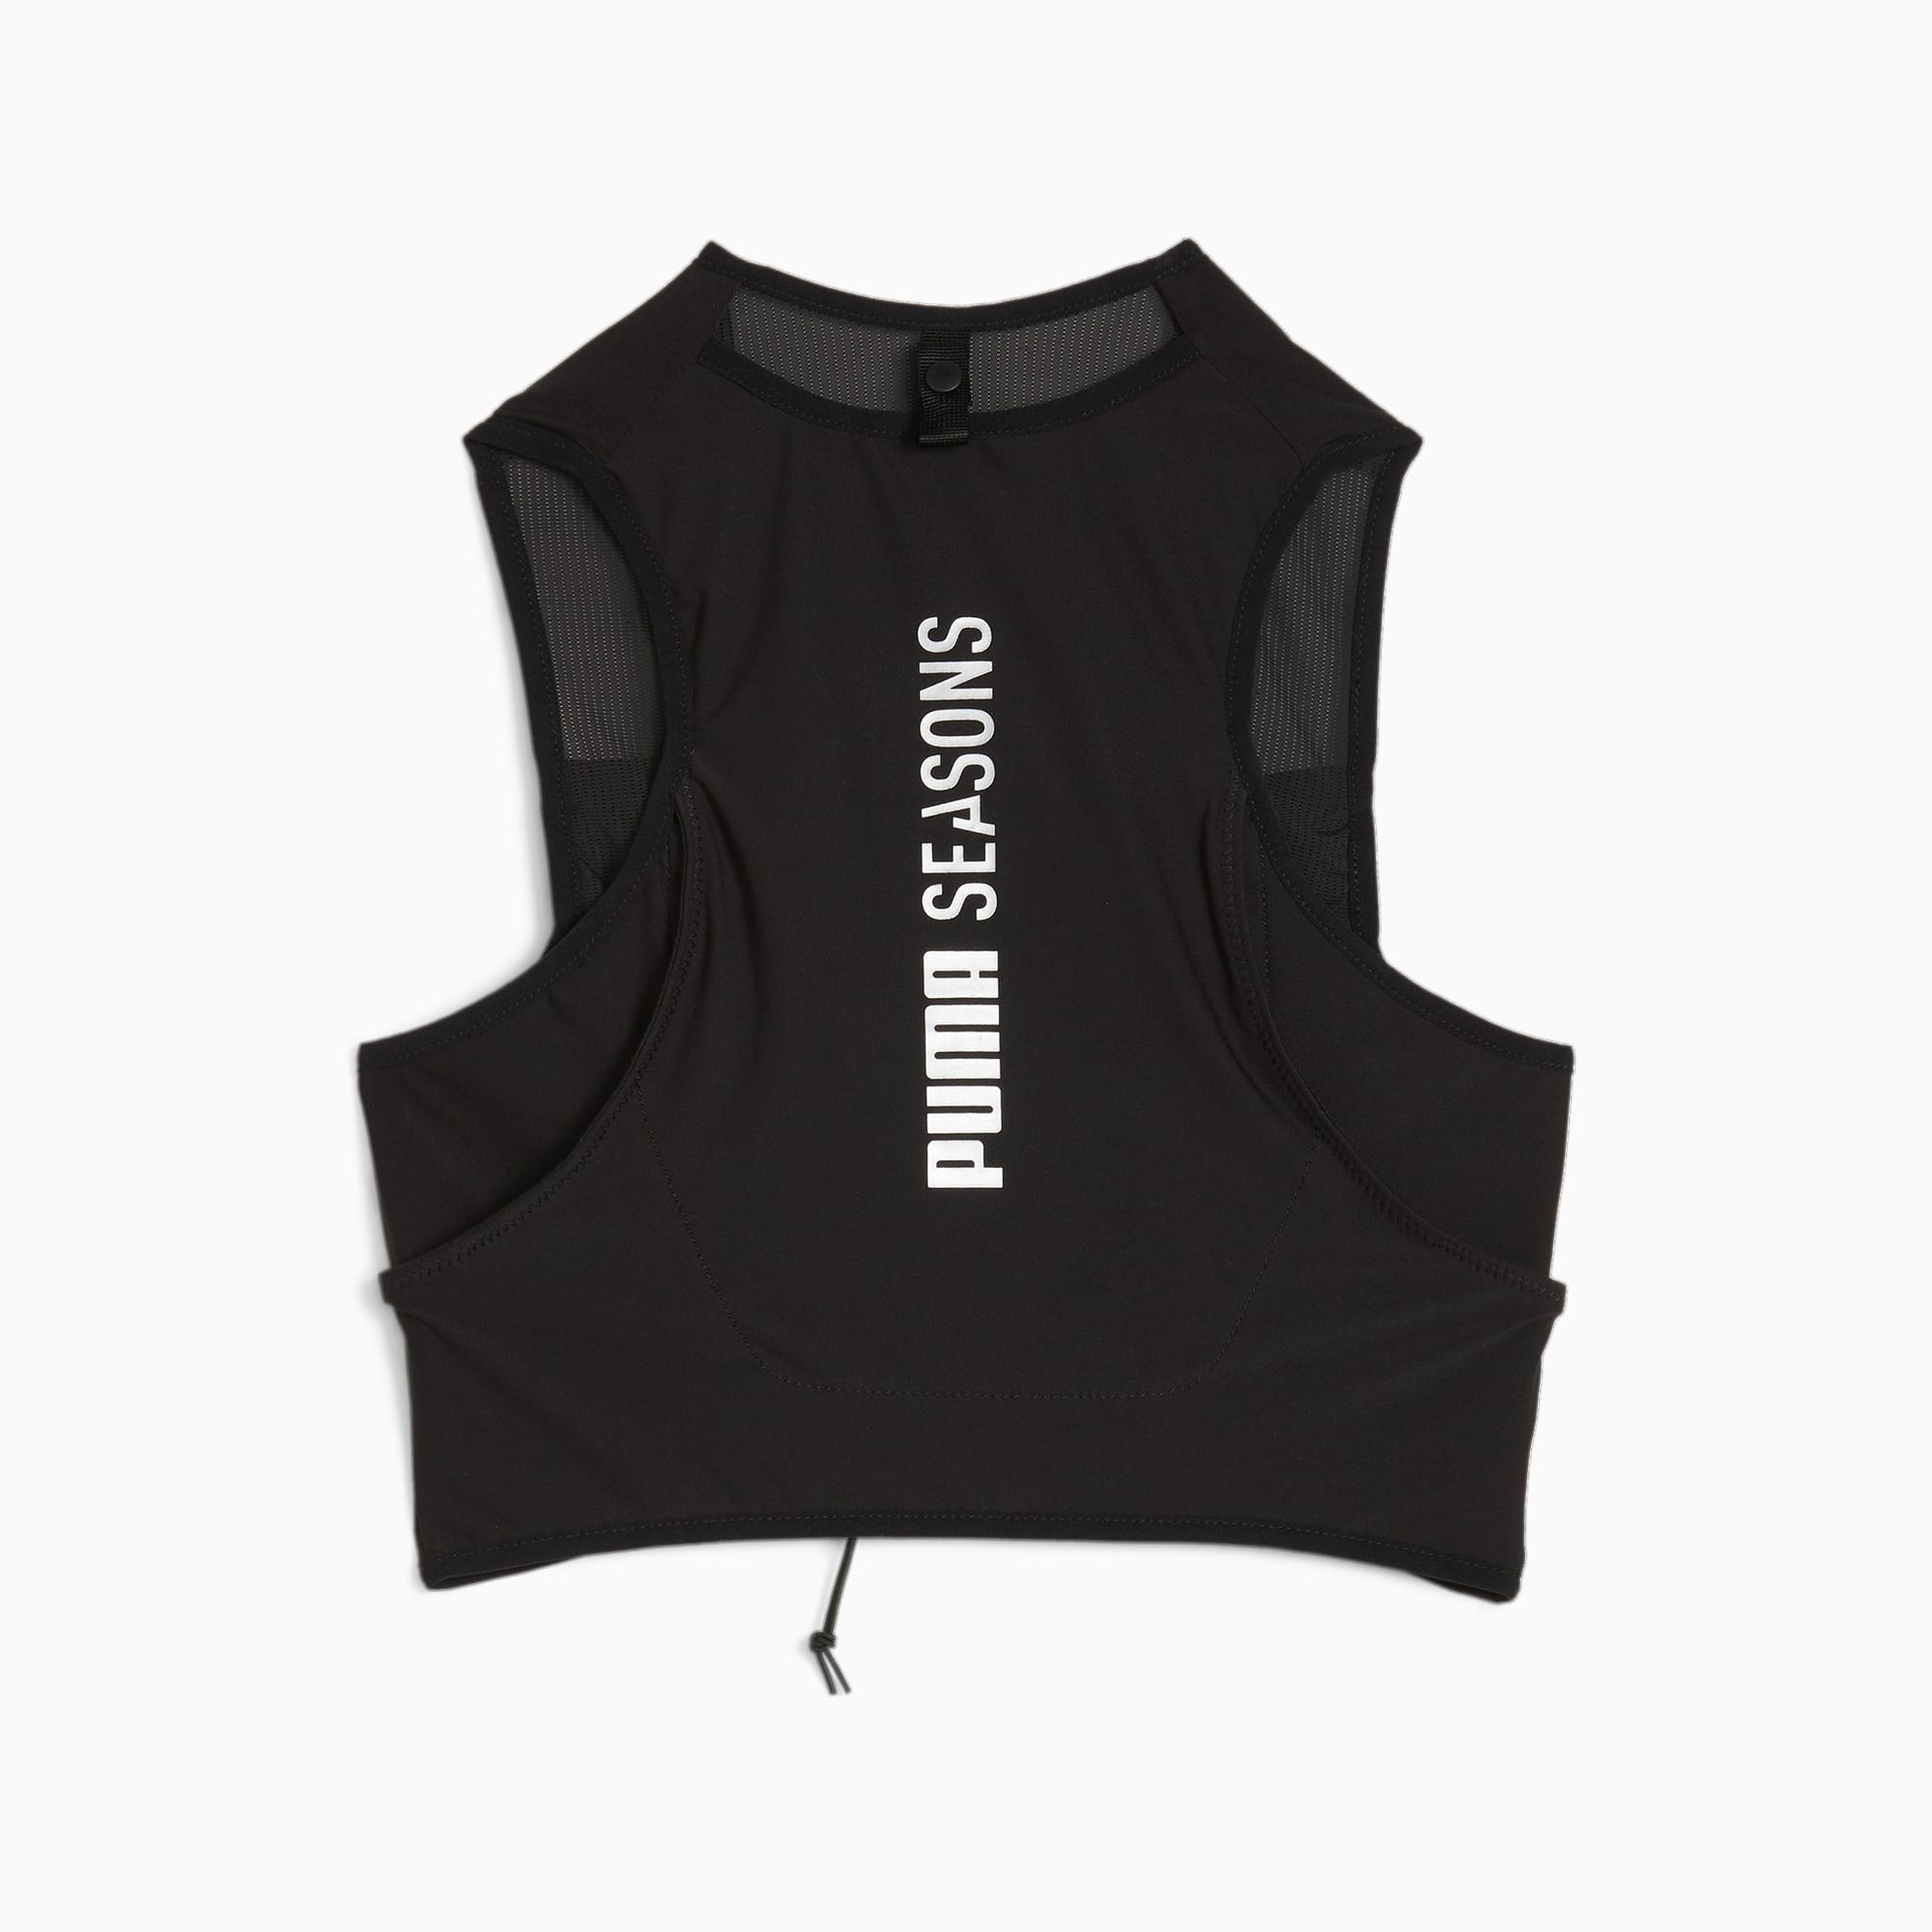 PUMA Seasons Trail Running Vest Women's Jacket, Black, Size L/XL, Clothing